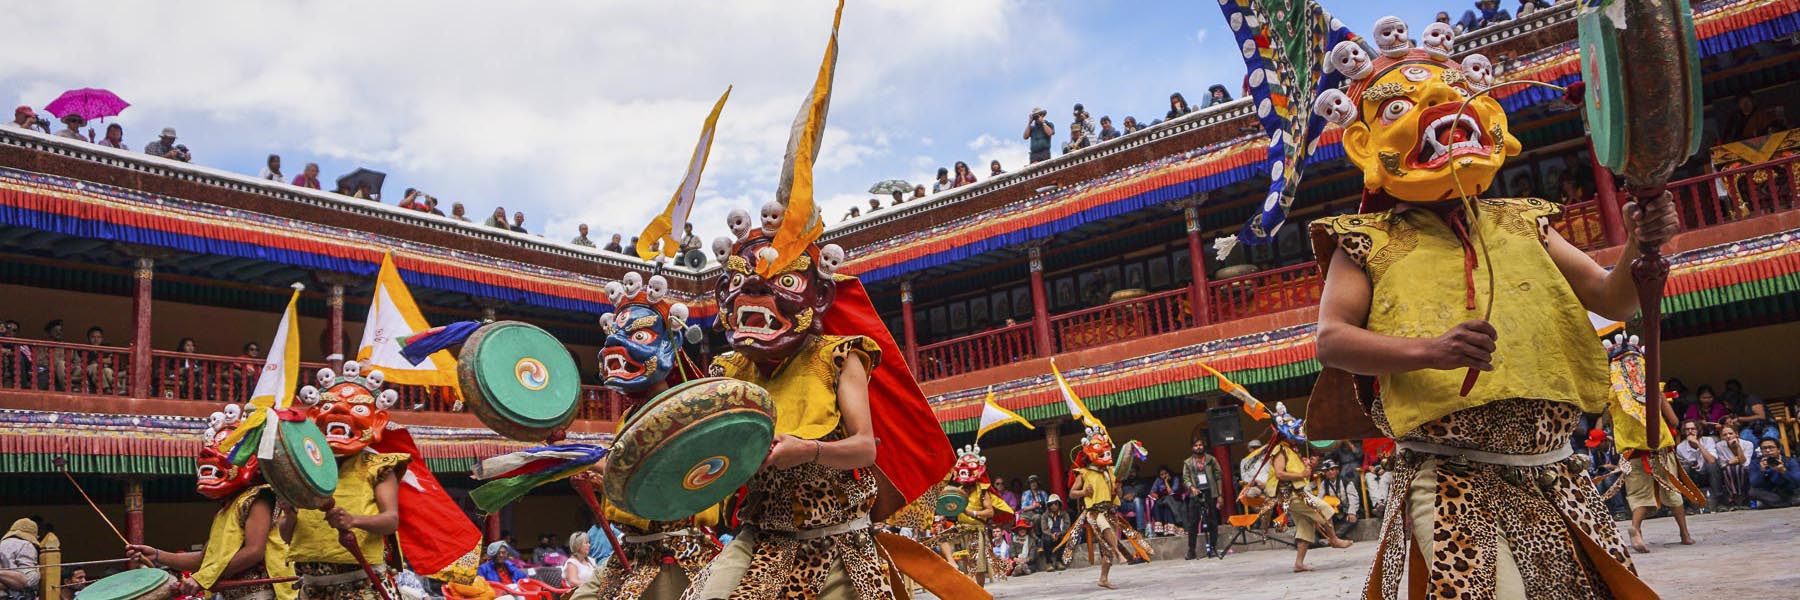 Remote Festivals of Asia